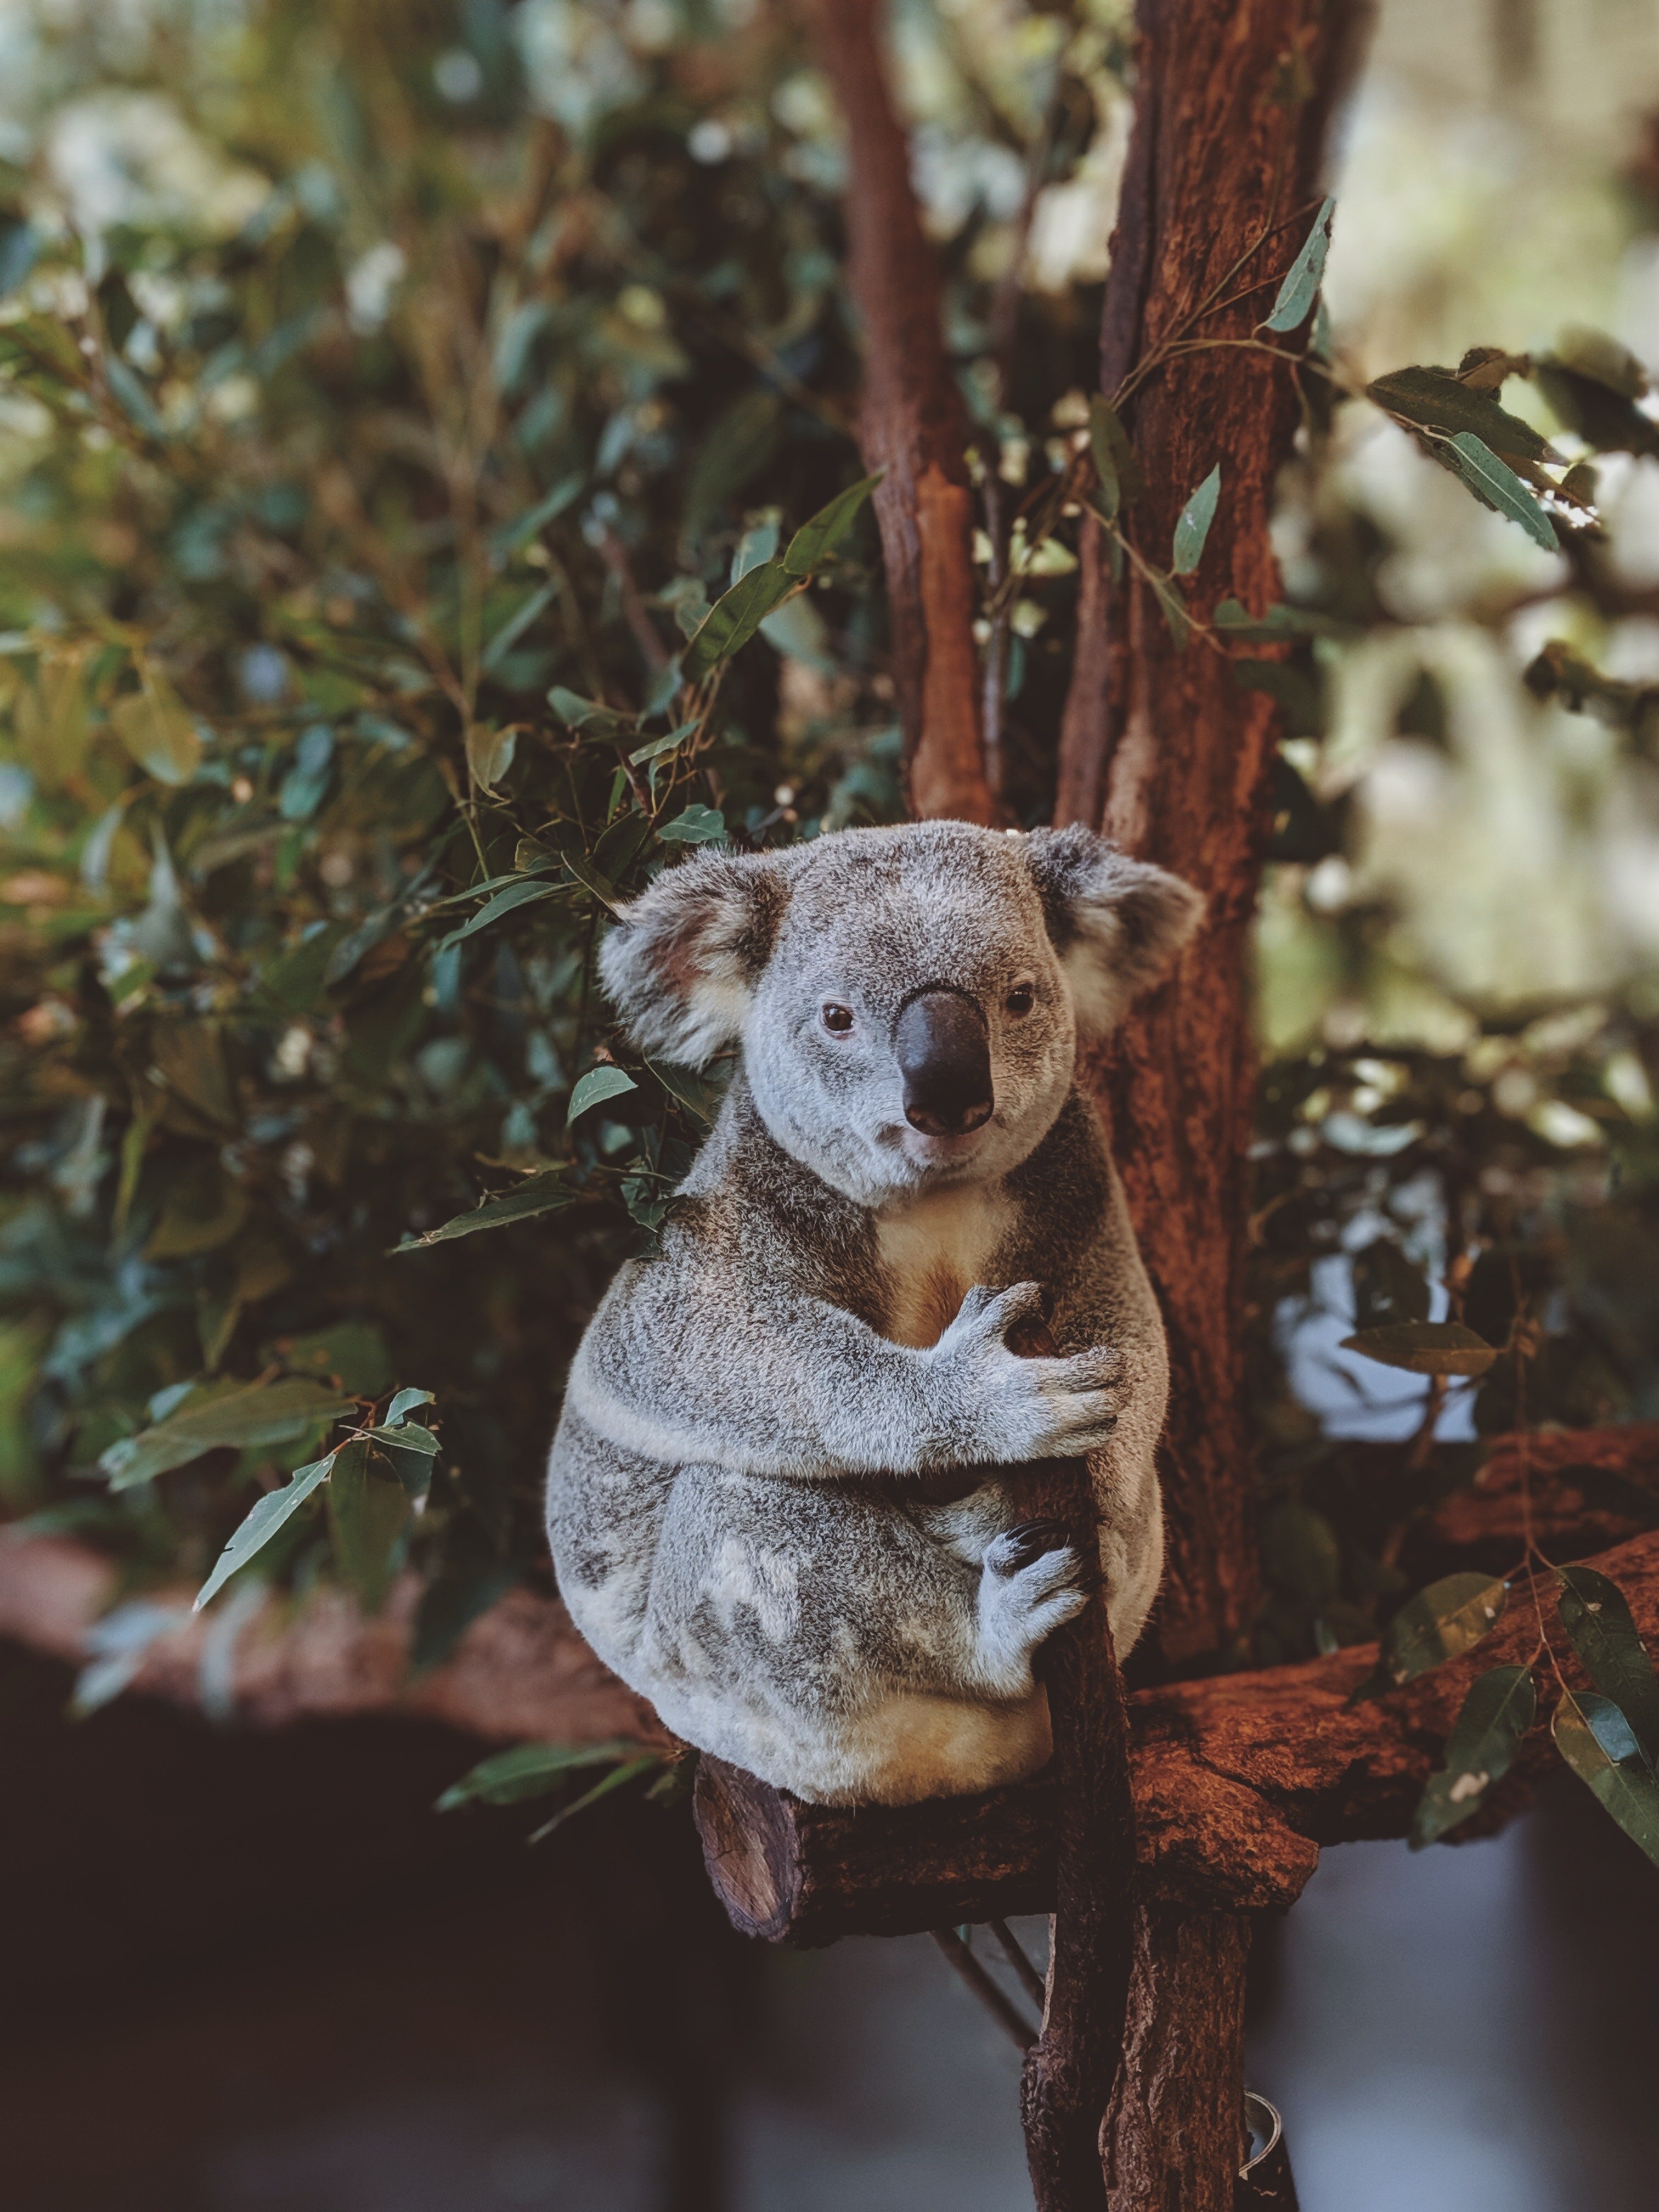 Koala hugging the tree